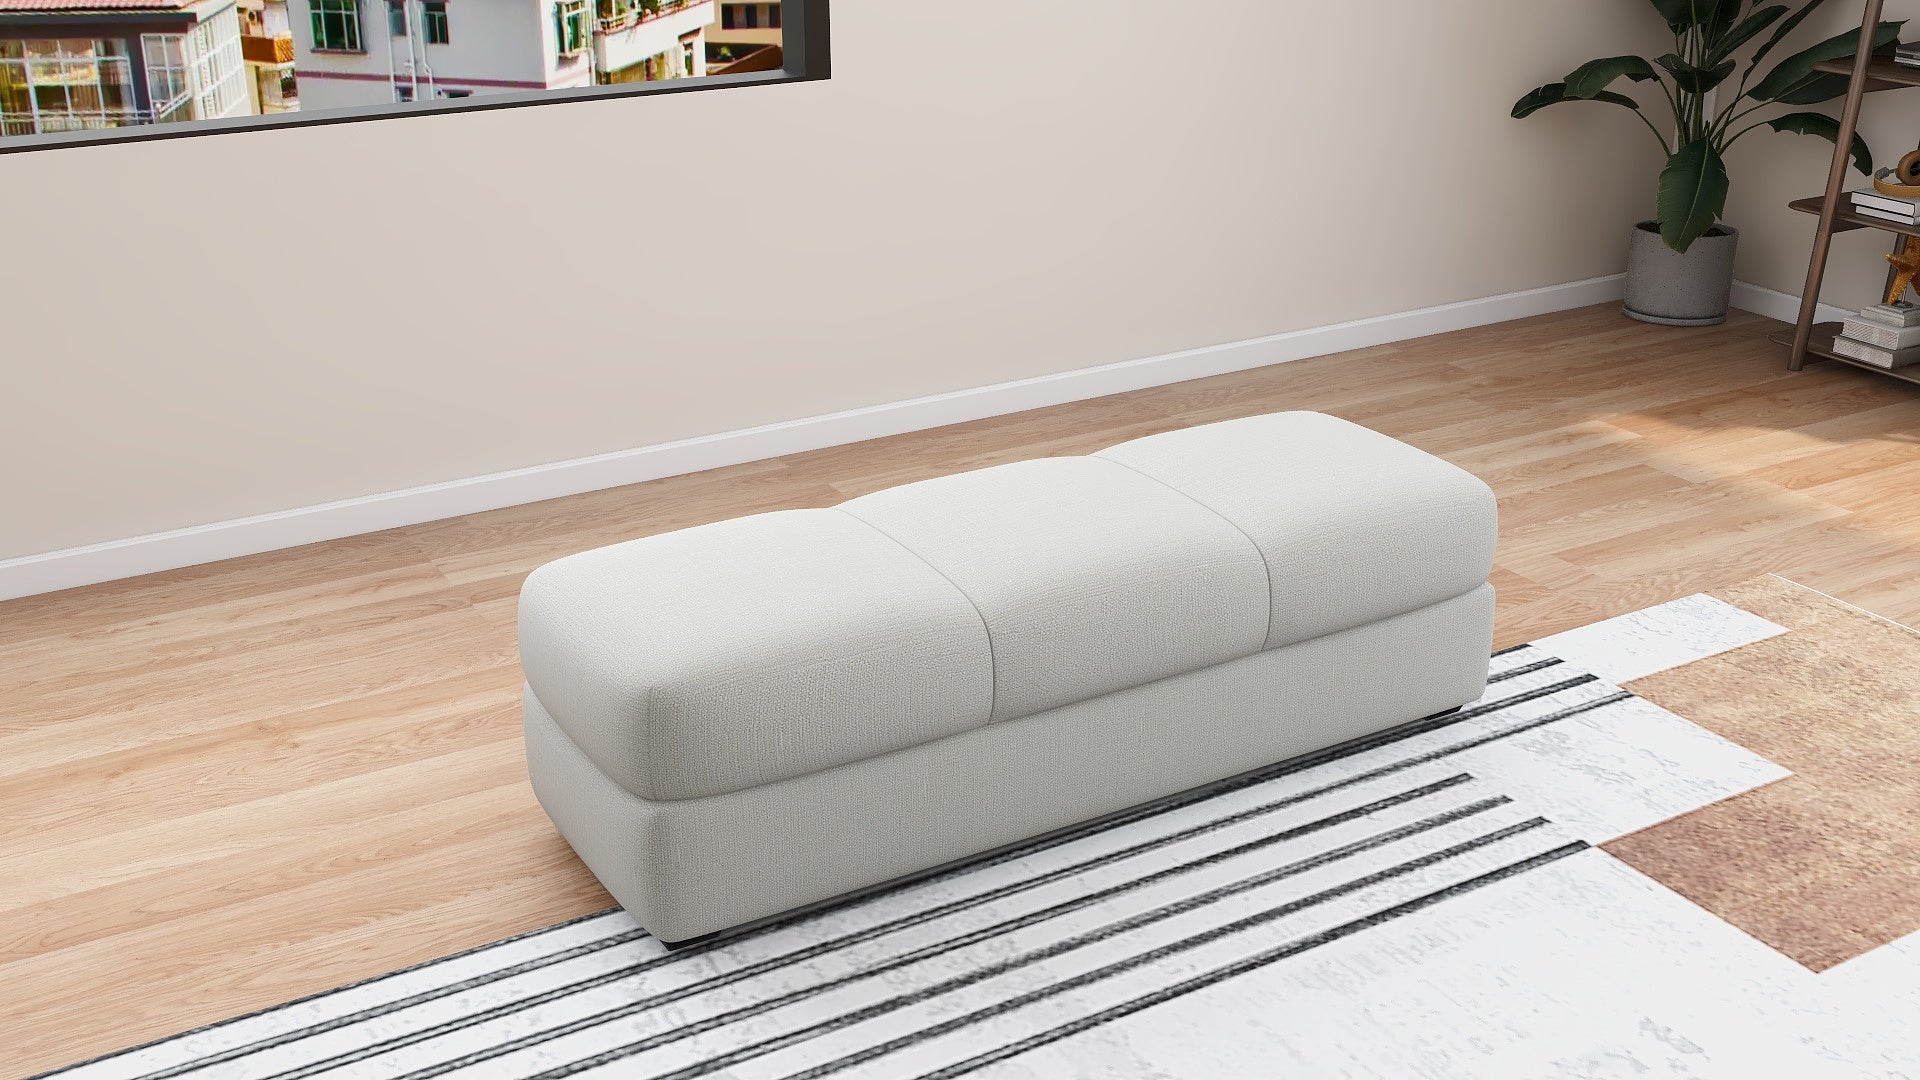 CRYSTAL Fabric Sofa Bench AF Home